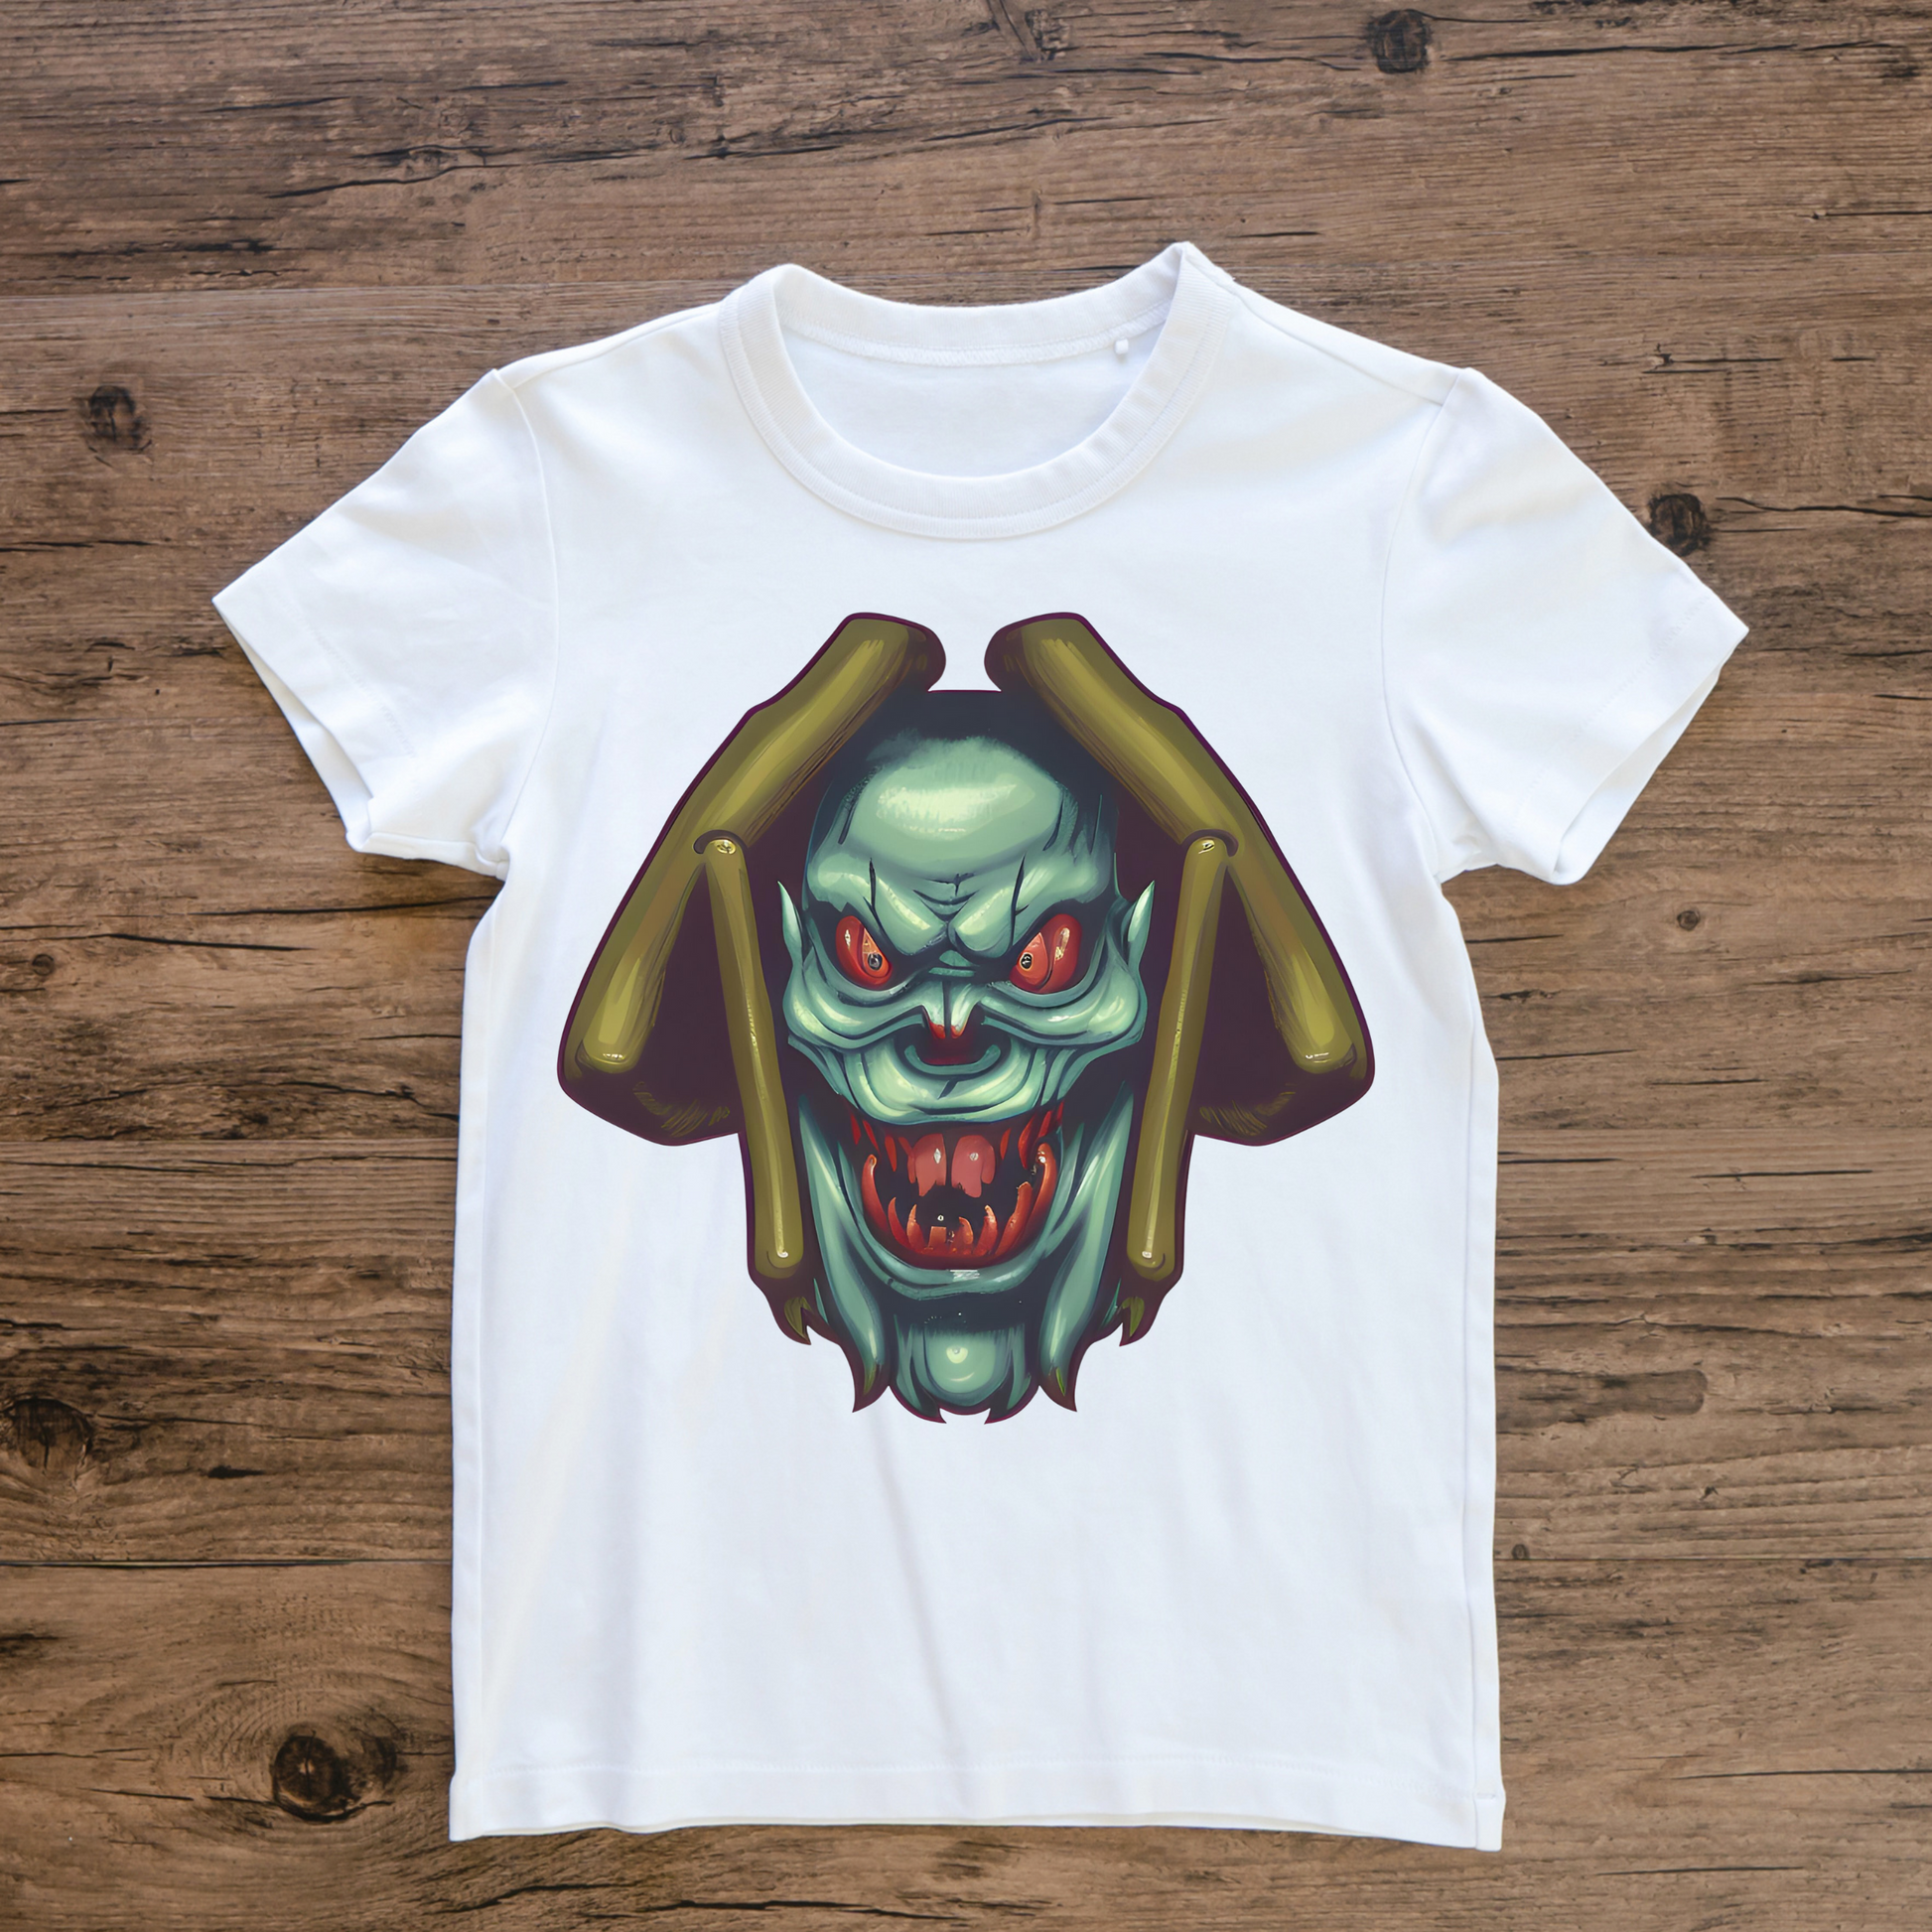 Creepy green monster gift idea for Halloween season 2023 - Men's tee - Premium t-shirt from Lees Krazy Teez - Just $19.95! Shop now at Lees Krazy Teez